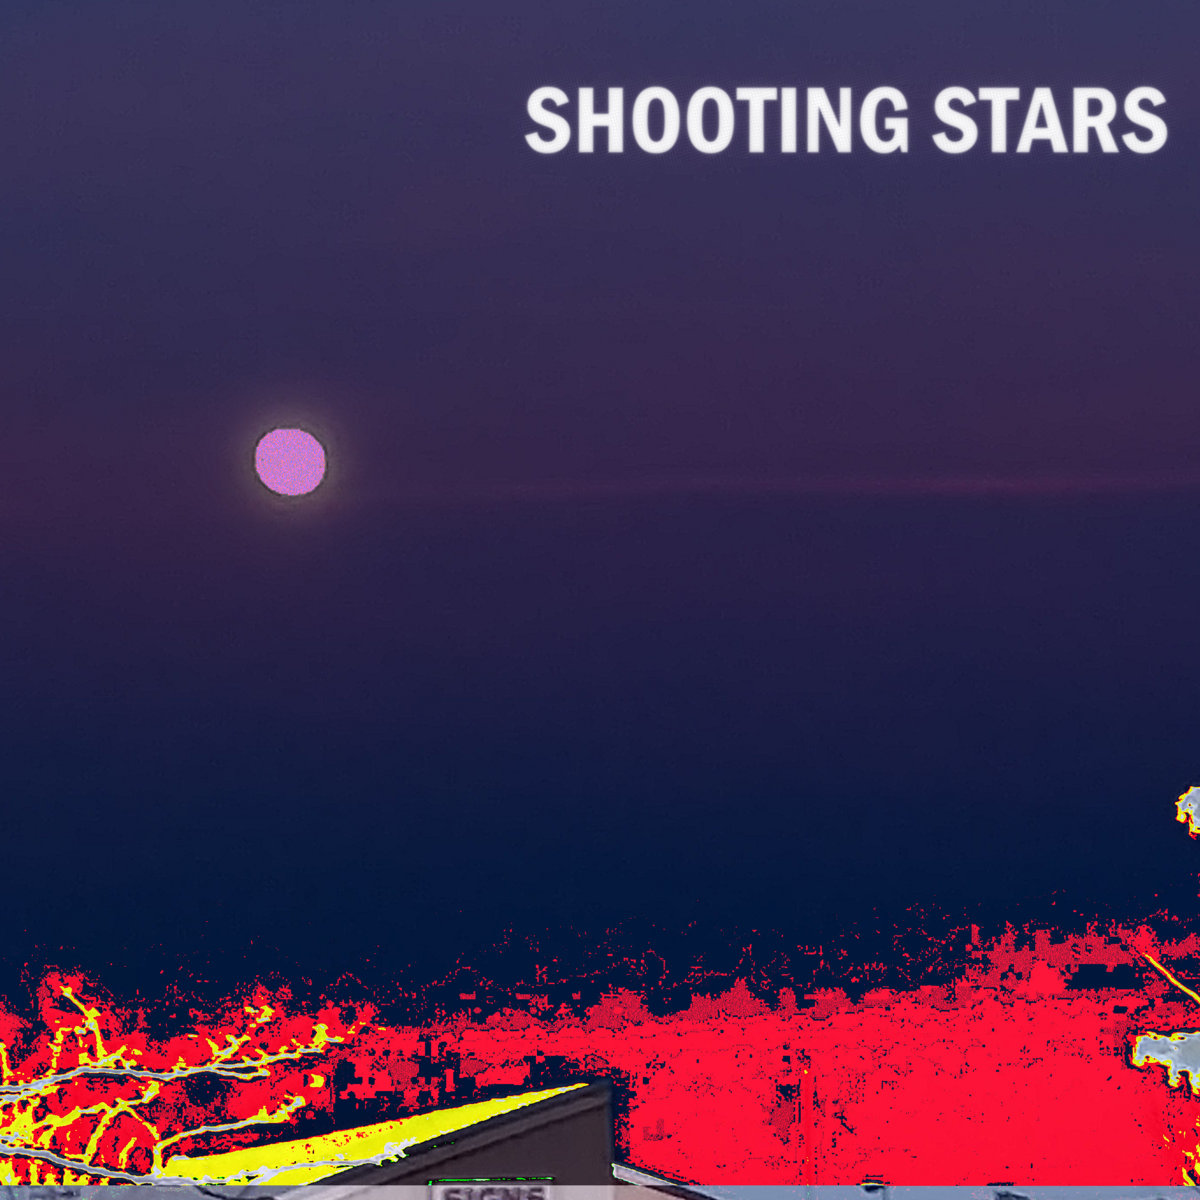 Shooting Stars - Bag Raiders - YouTube